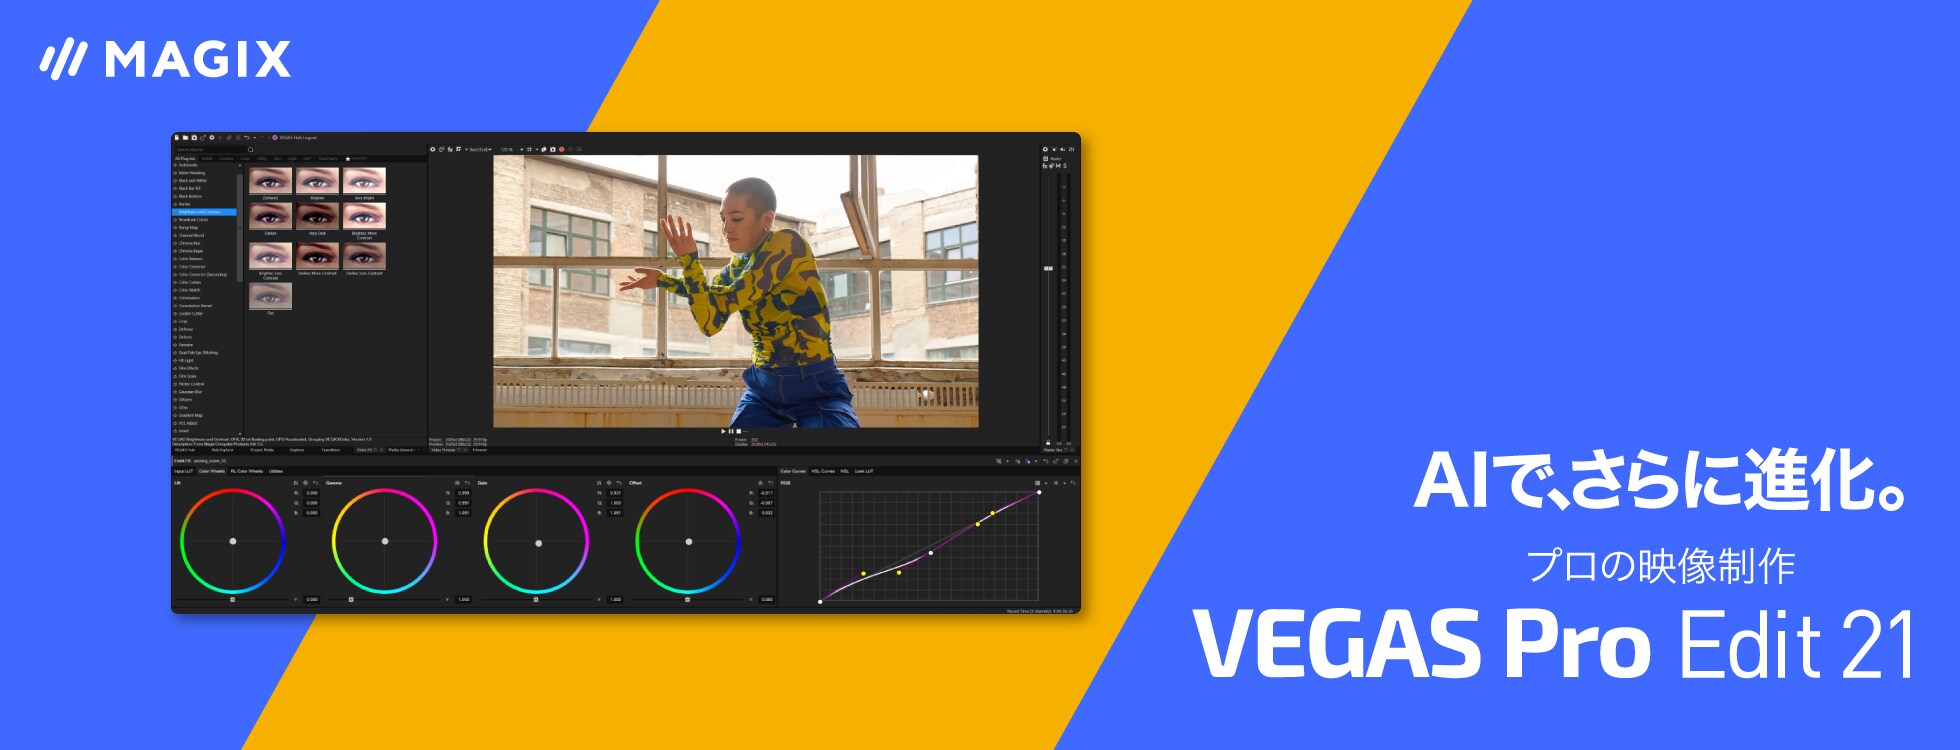 VEGAS Pro Edit 21 - プロの映像制作ソフト